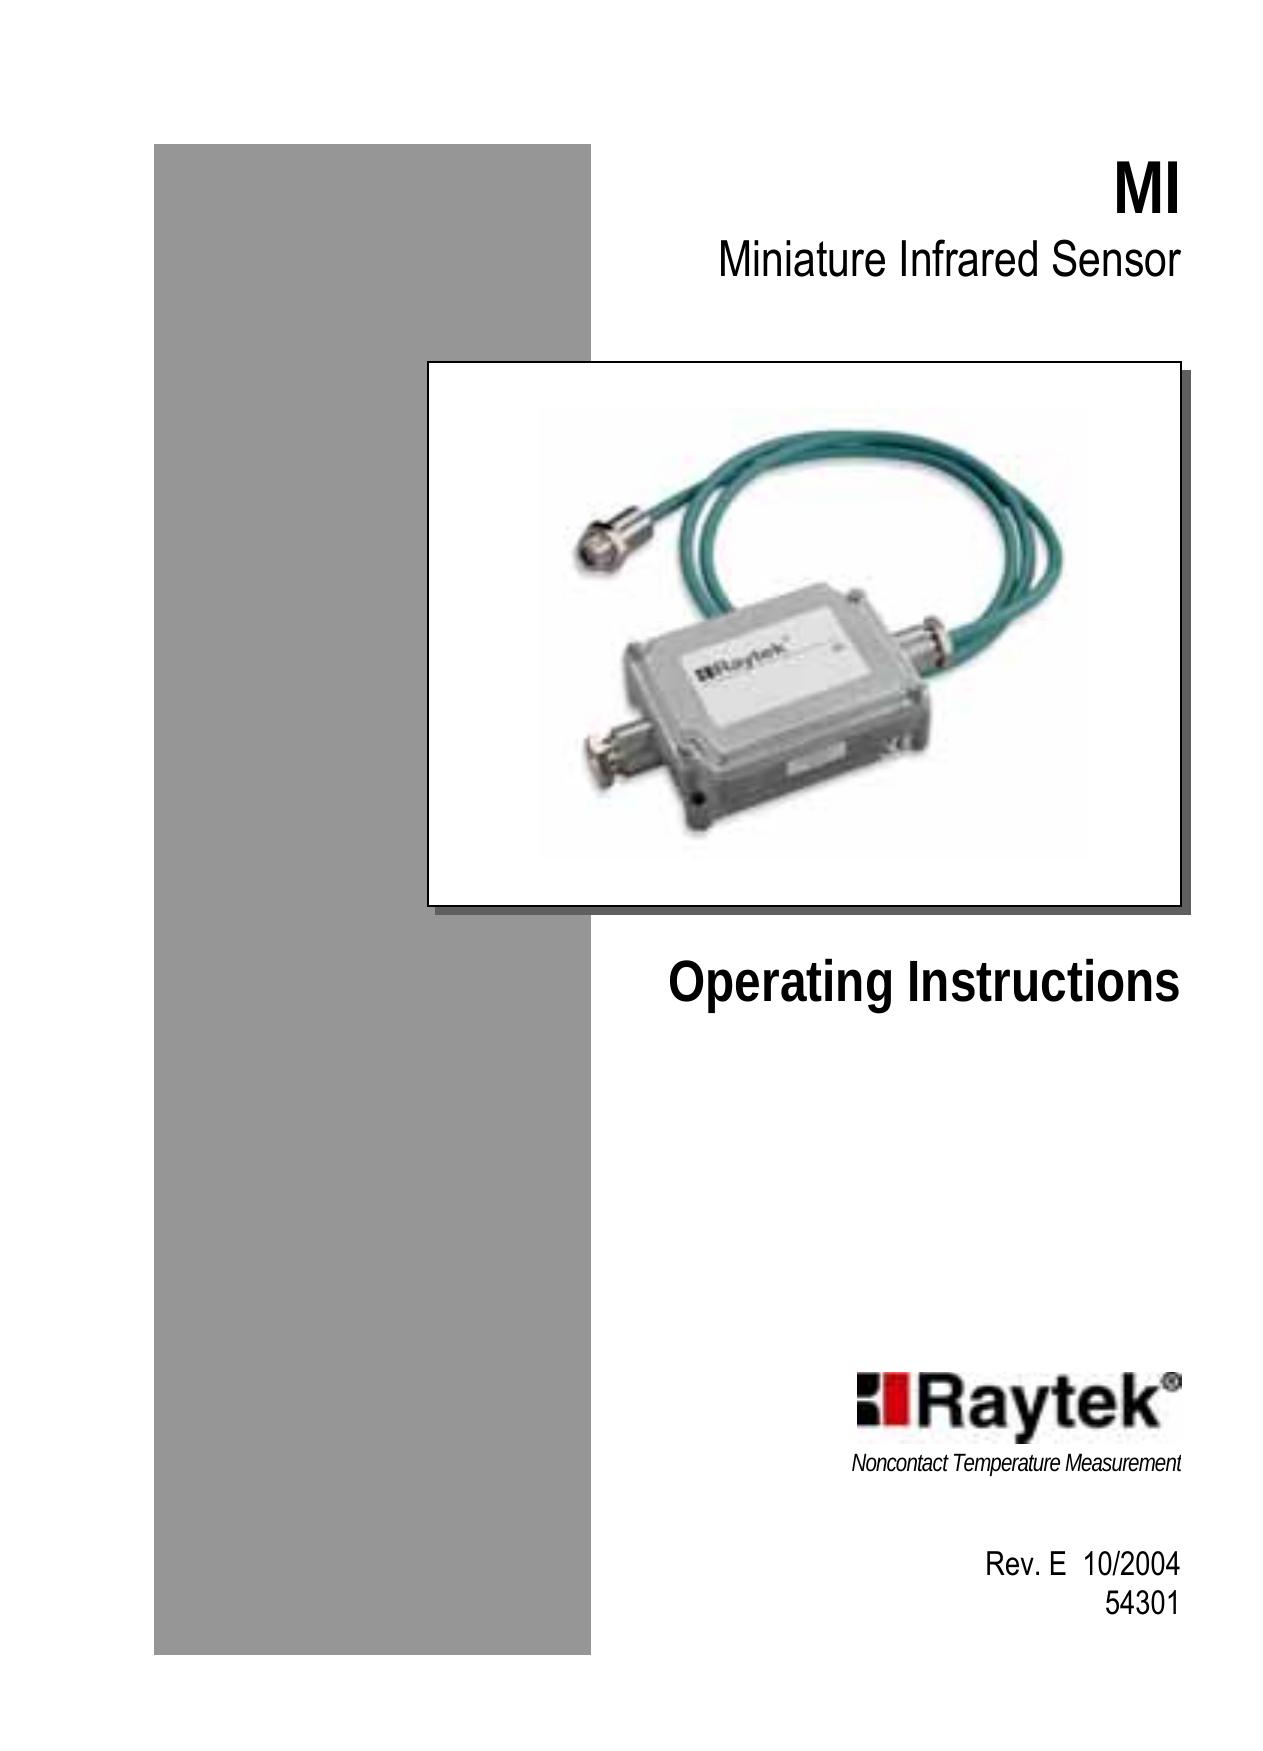 RayTek 54301 Thermometer User Manual